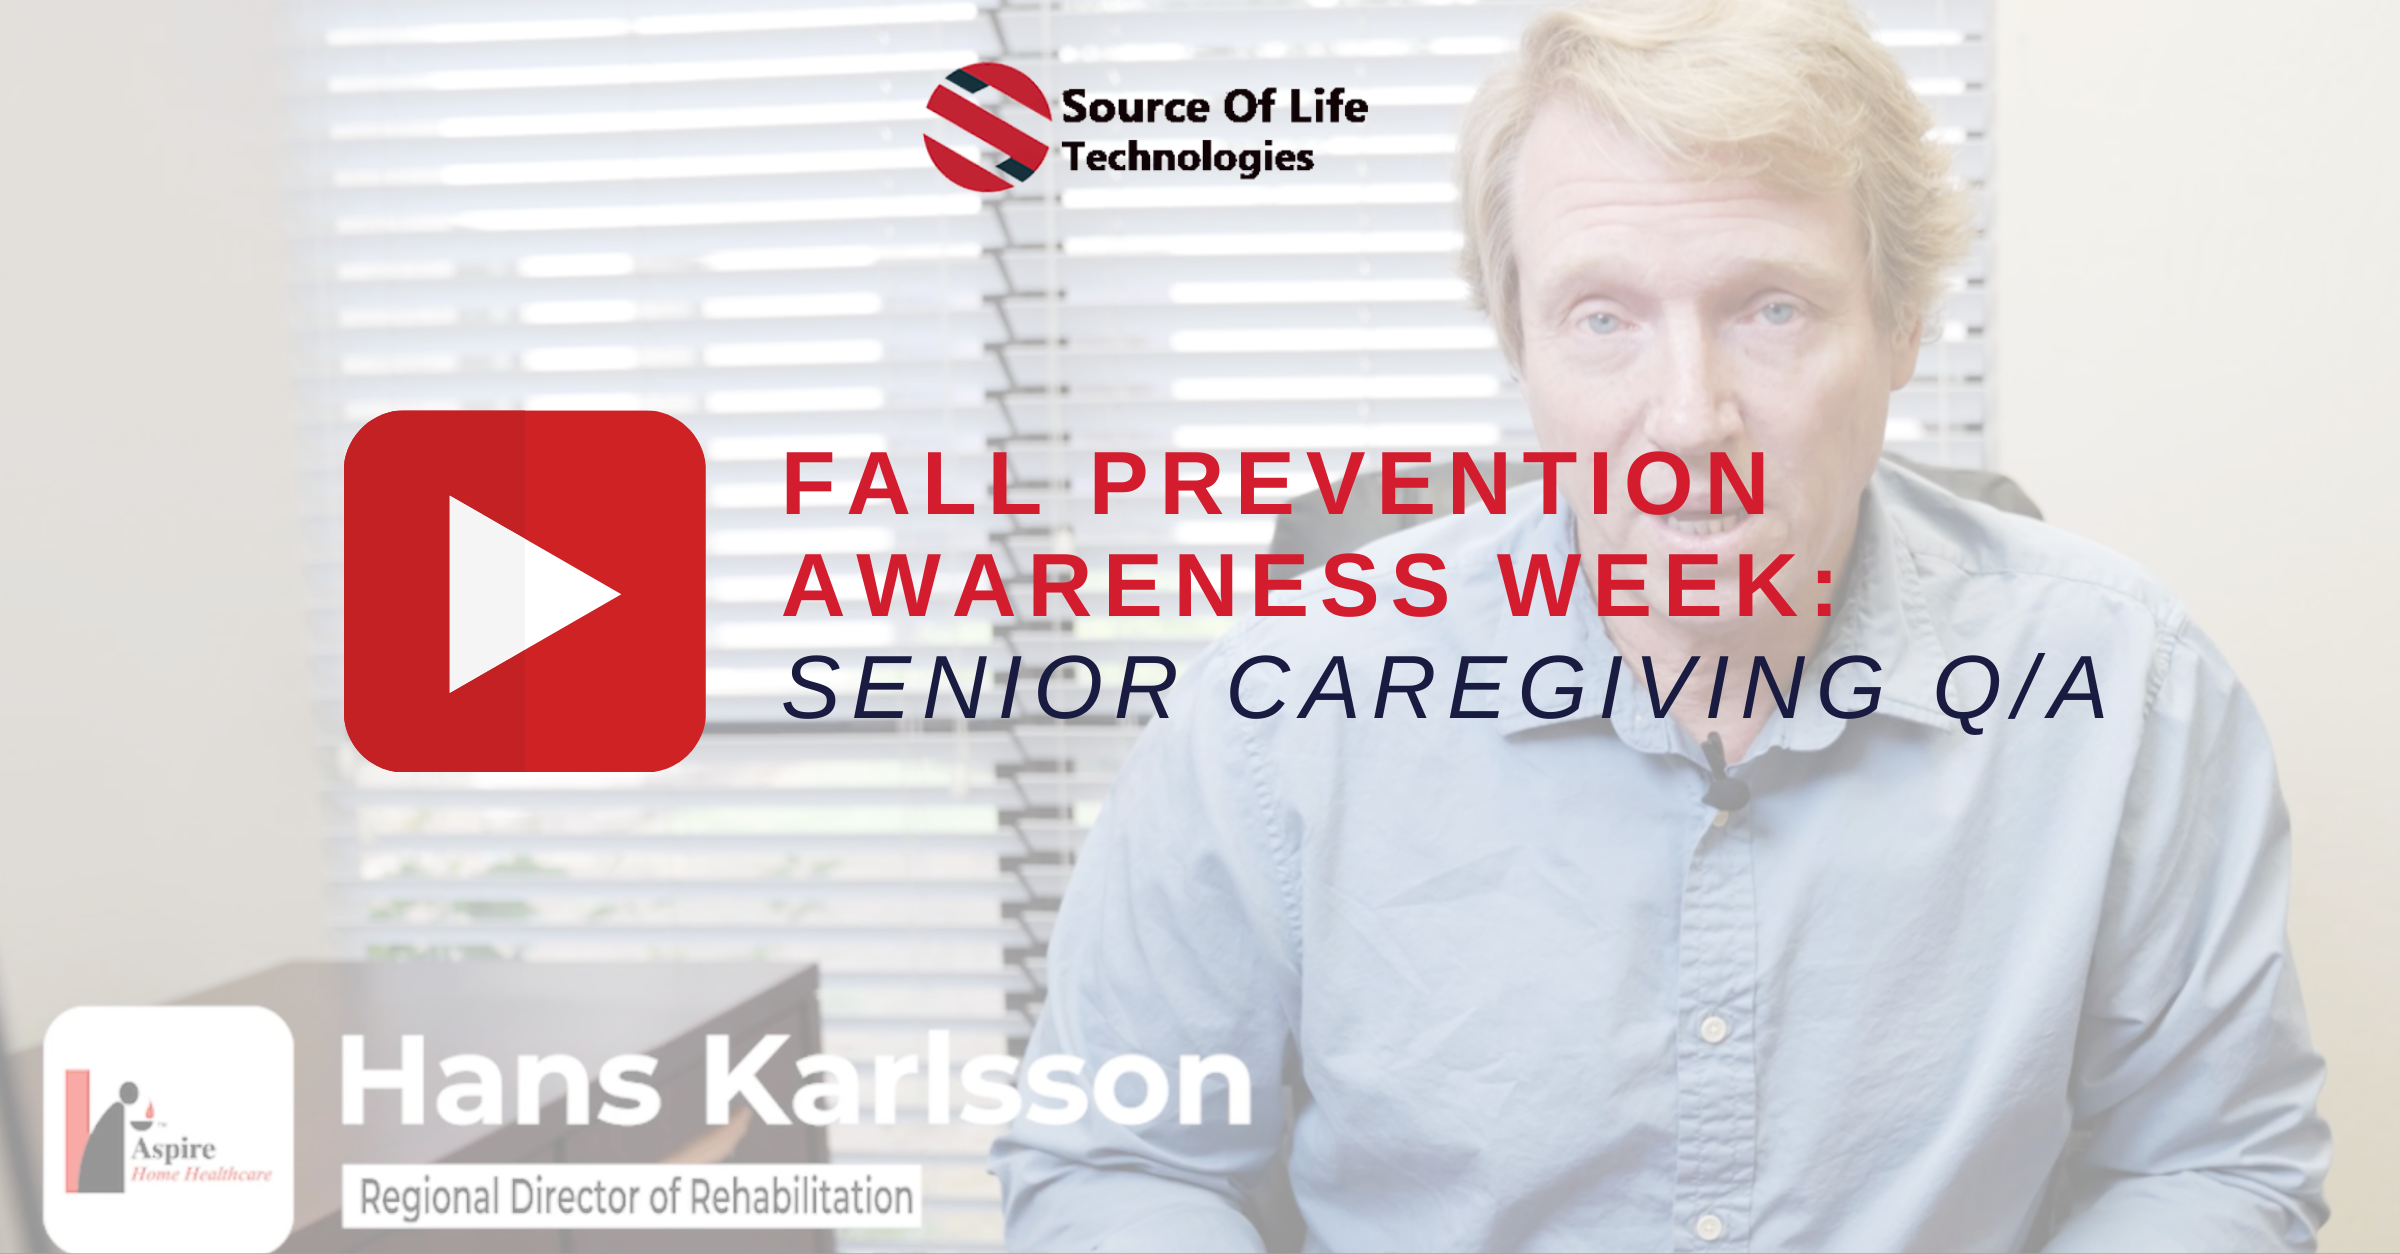 Fall Prevention Awareness Week: Senior Caregiving Q/A